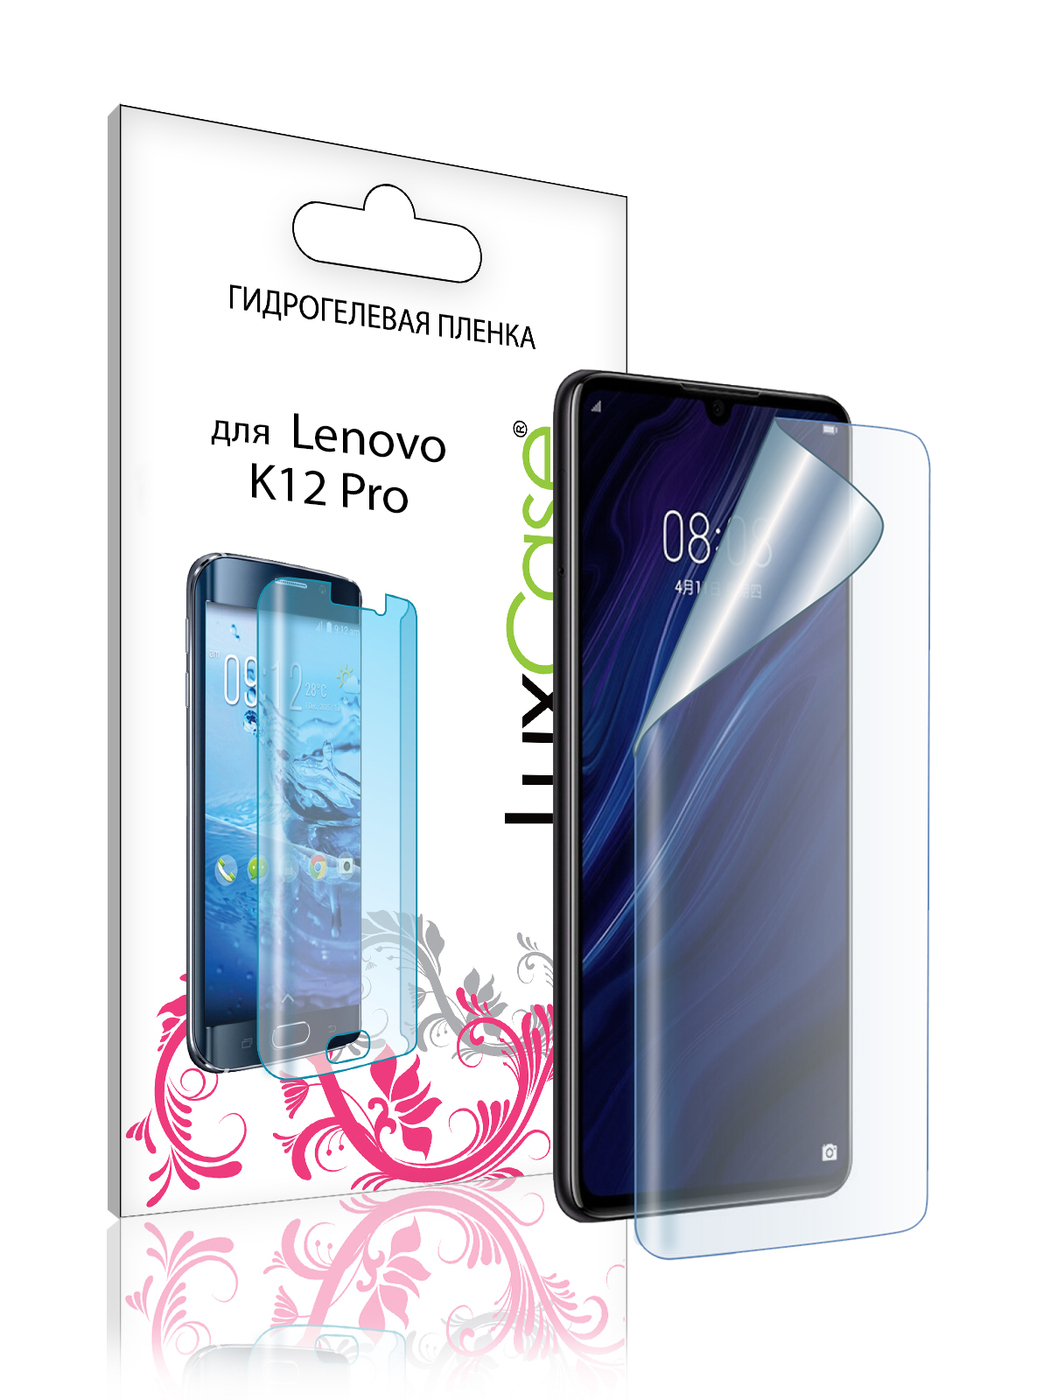 Пленка гидрогелевая LuxCase для Lenovo K12 Pro Front Transparent 86383 антишпион гидрогелевая пленка uv glass для lenovo k13 pro матовая